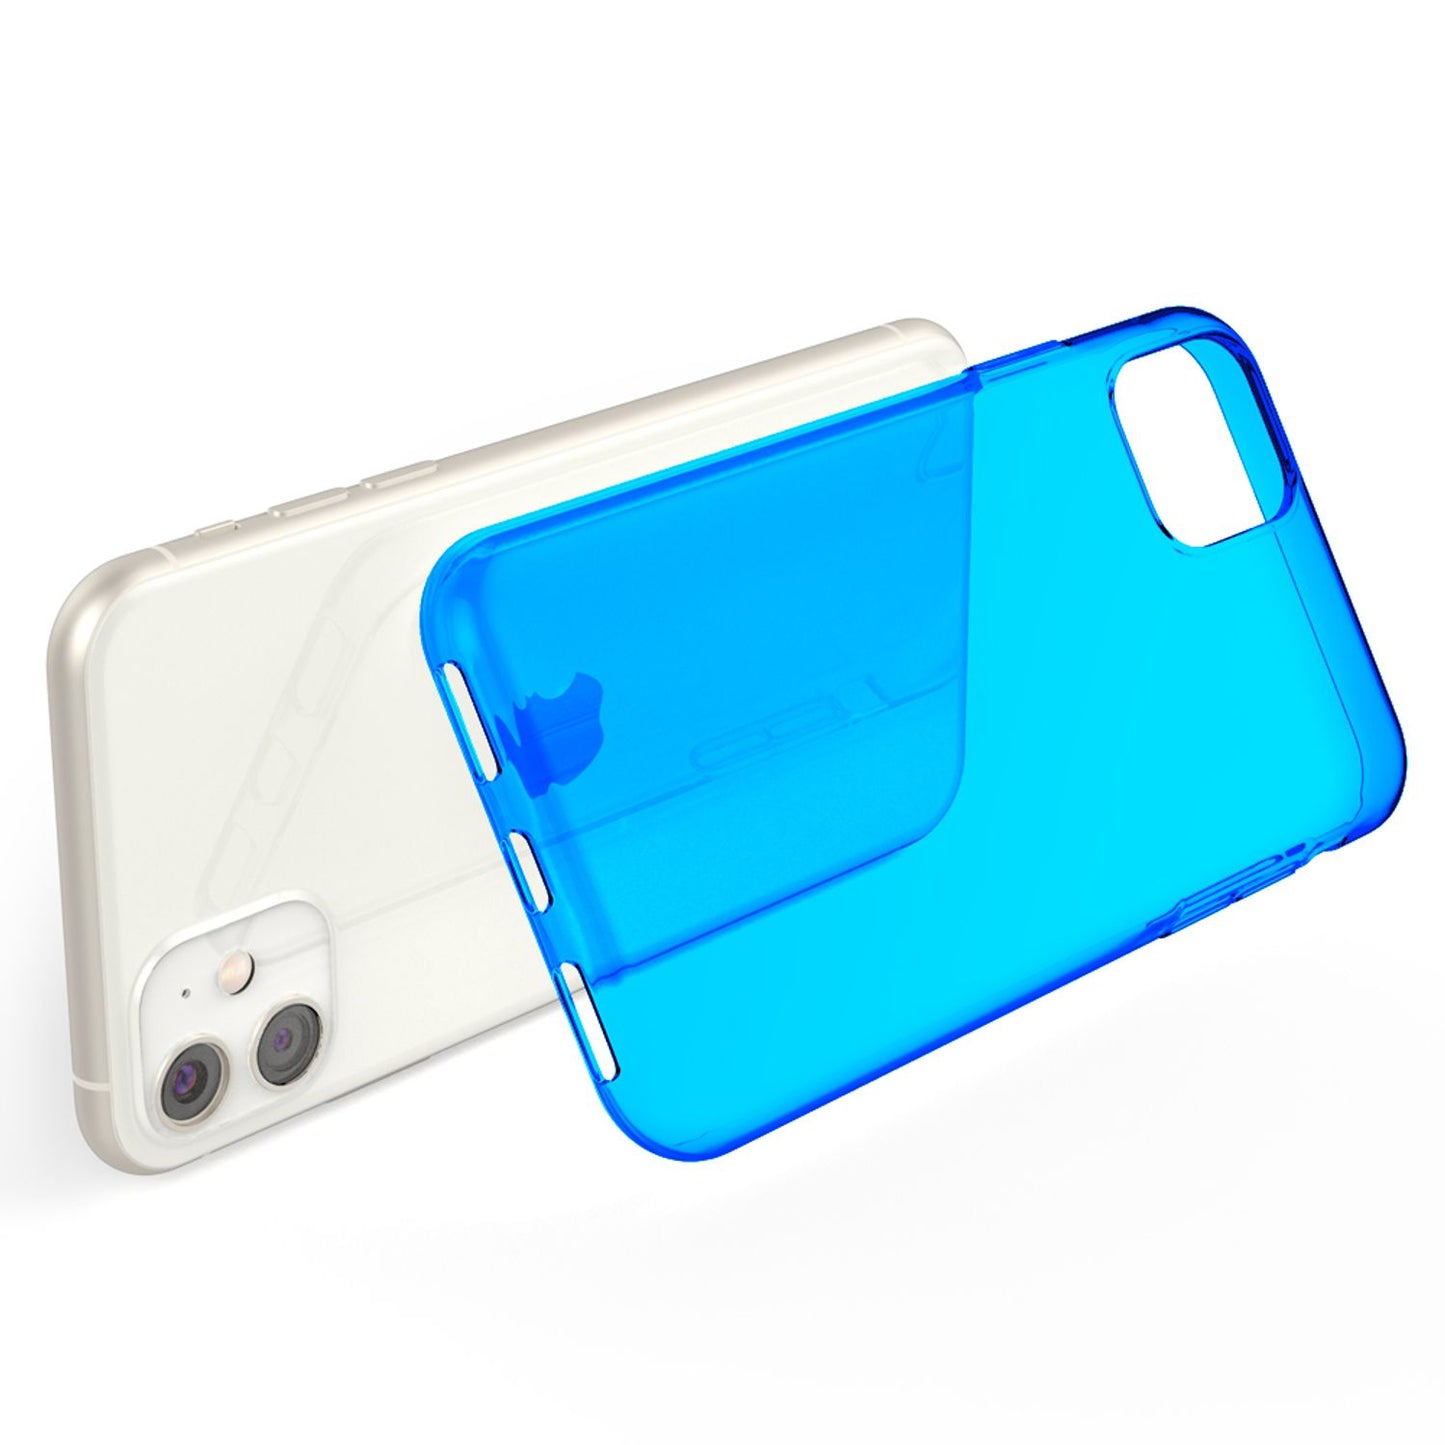 NALIA Handy Hülle für iPhone 11, Silikon Schutz Case Cover Tasche Bumper Etui